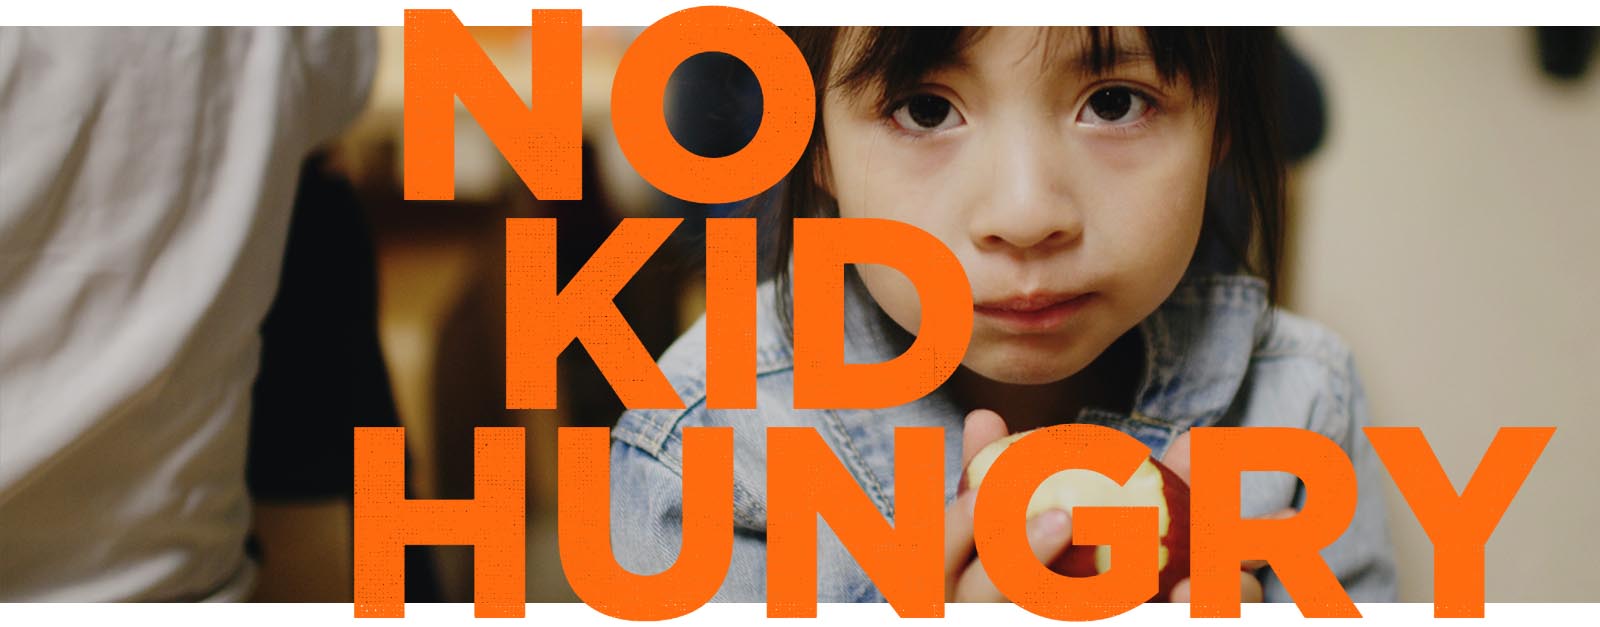 No Kid Hungry Banner Image